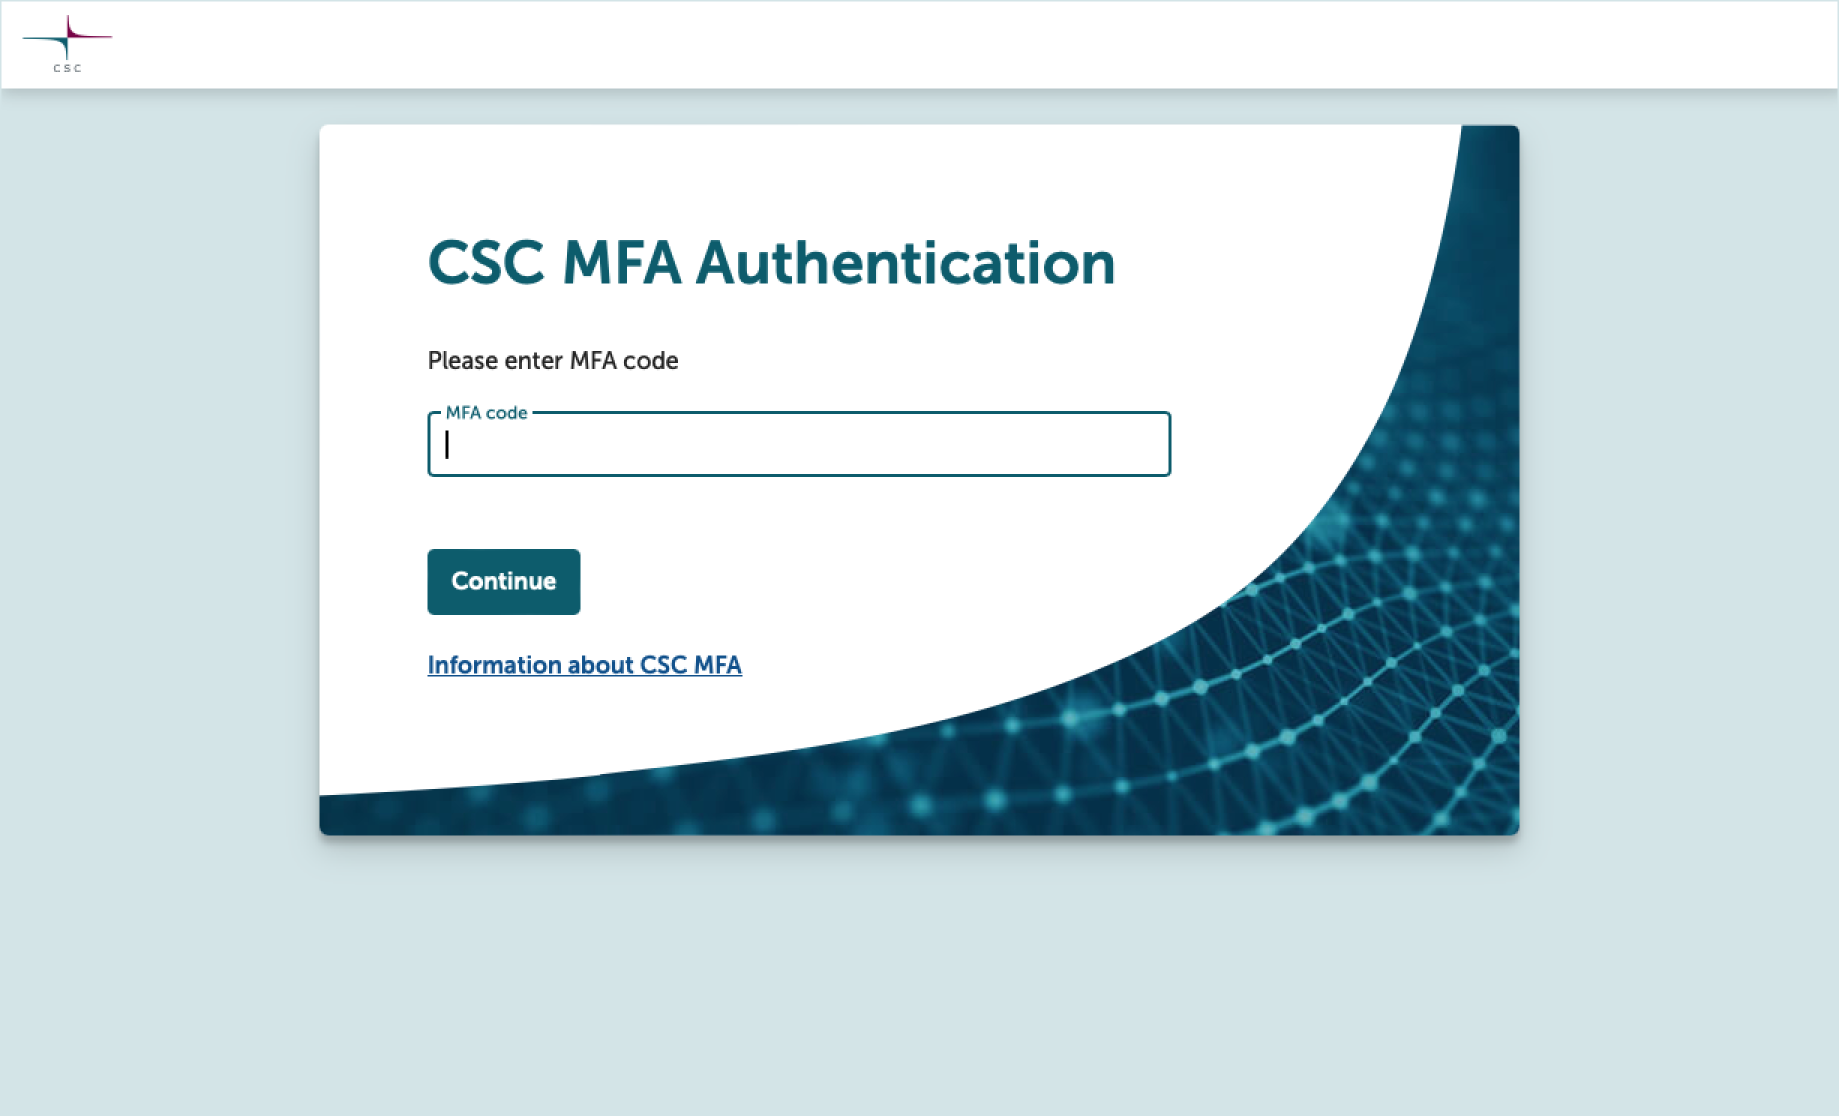 Multi-factor Authentication